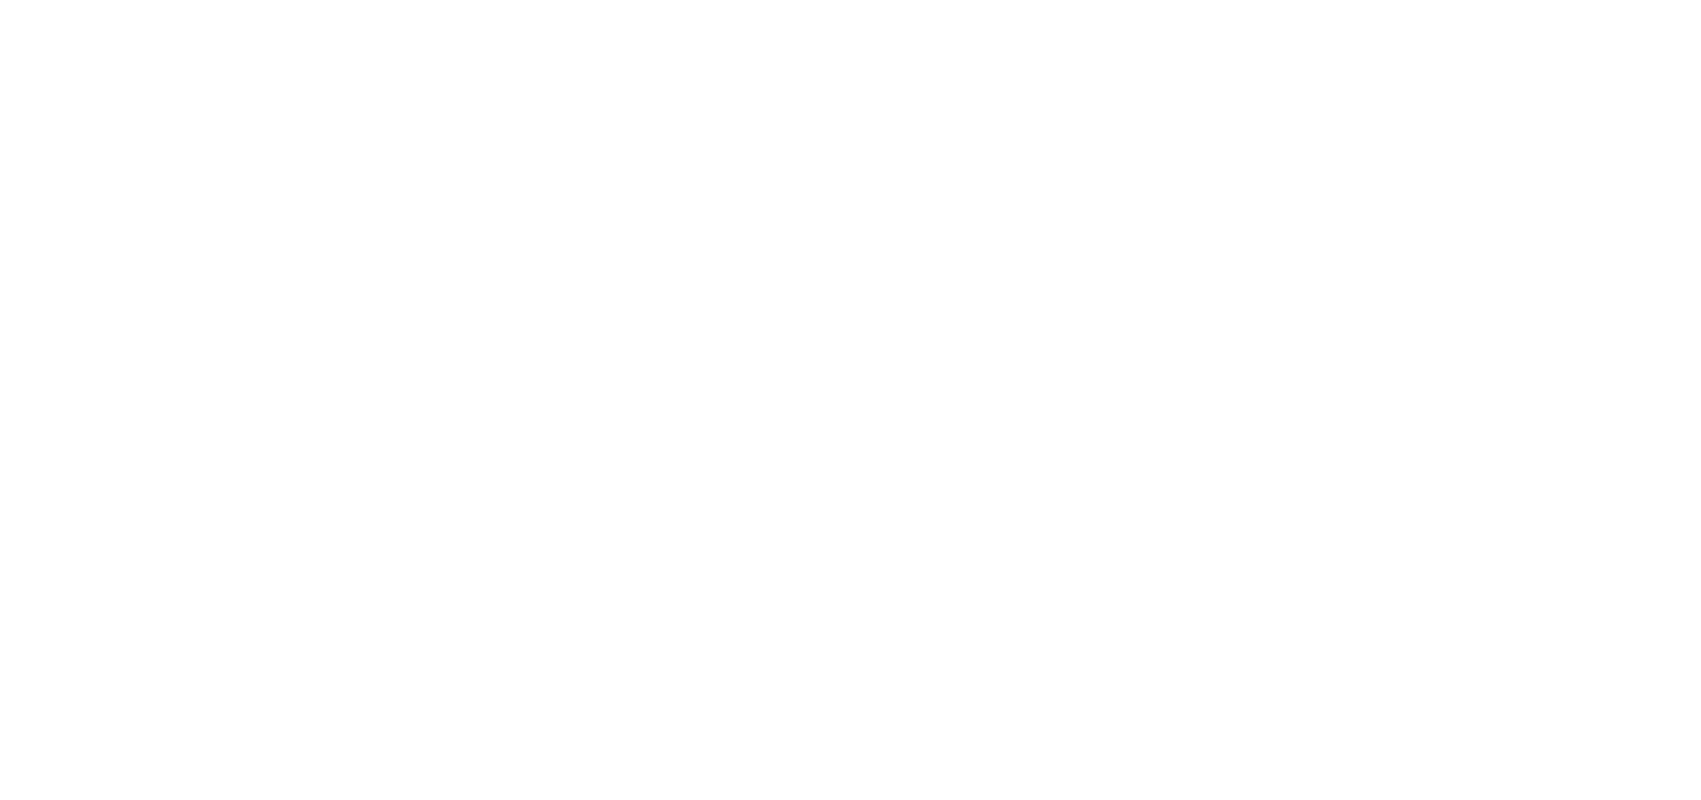 Central de Abasto de Mérida